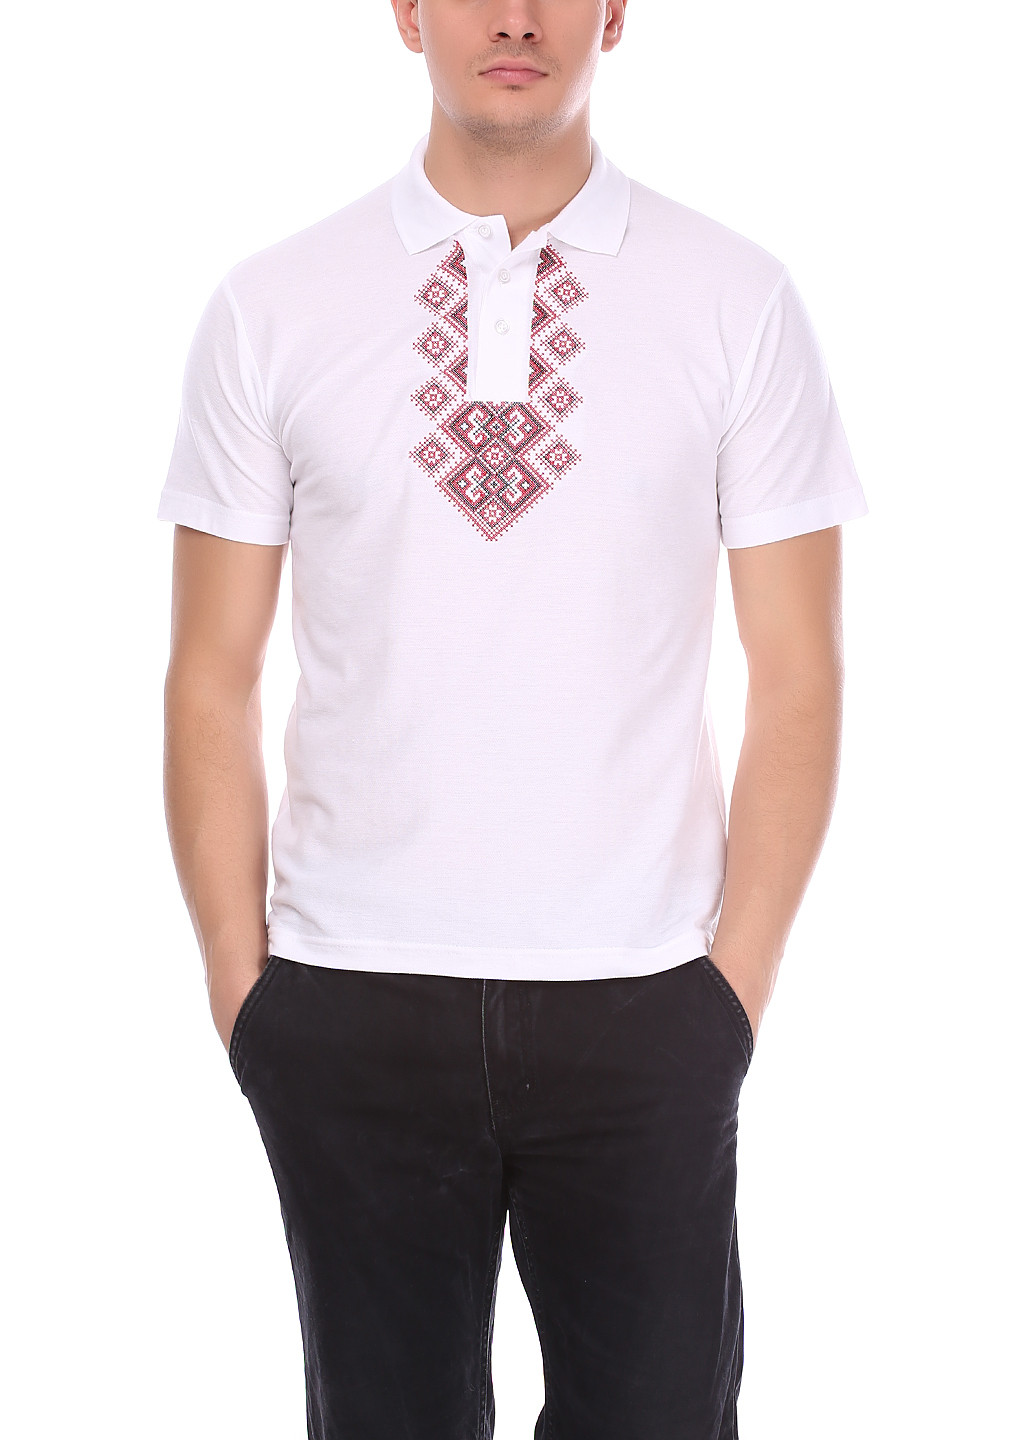 Белая футболка-поло для мужчин Sol's с орнаментом